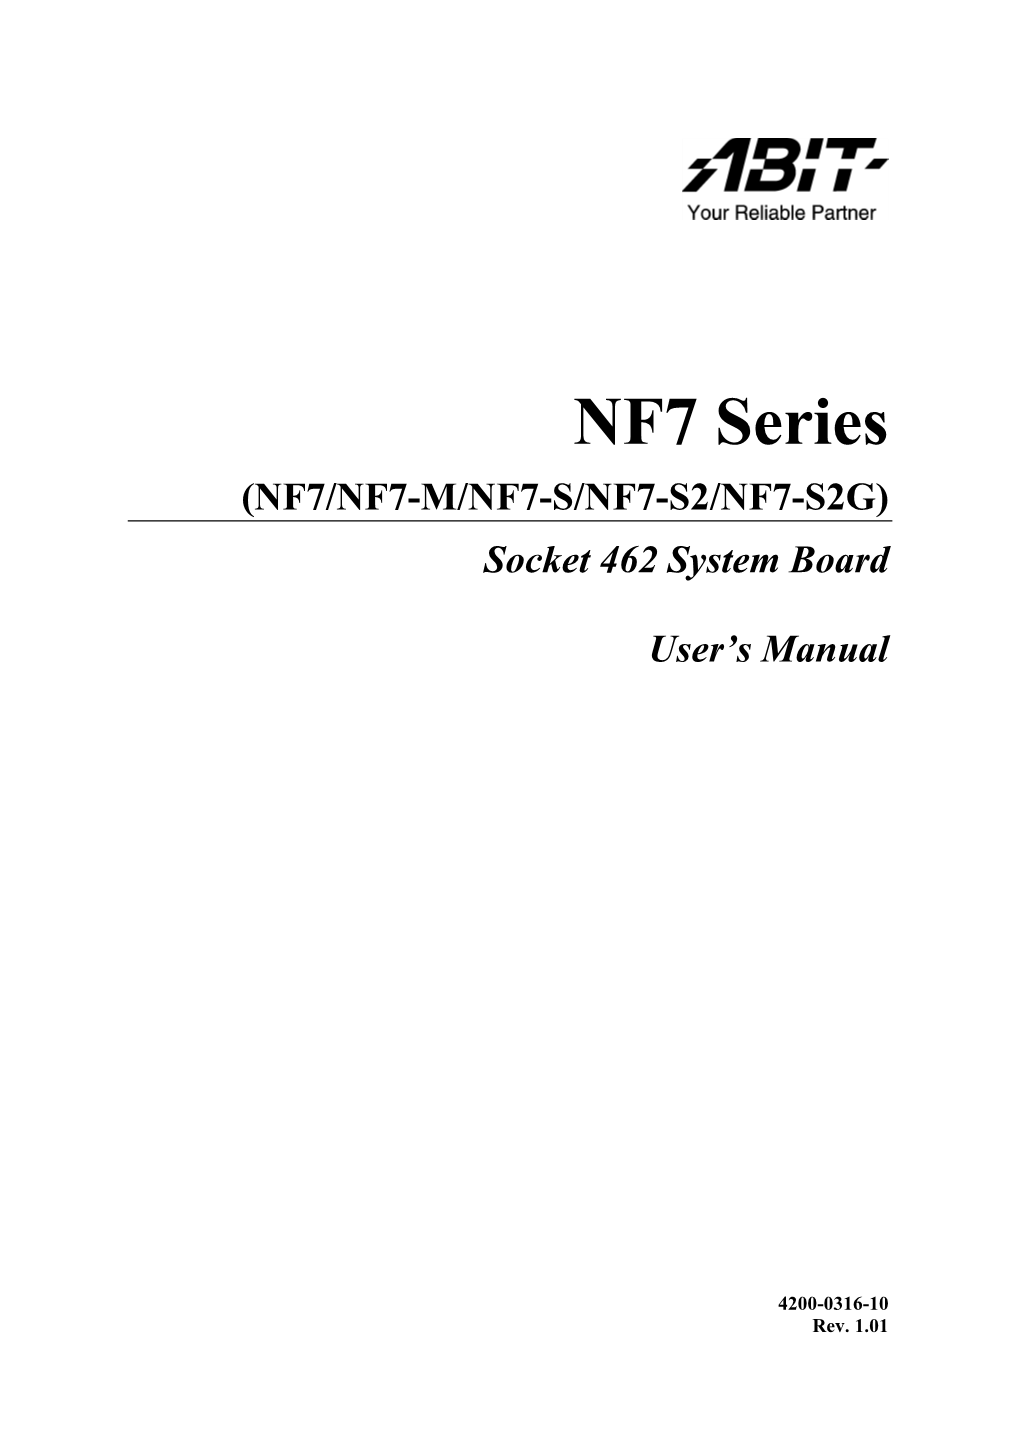 NF7 Series (NF7/NF7-M/NF7-S/NF7-S2/NF7-S2G) Socket 462 System Board